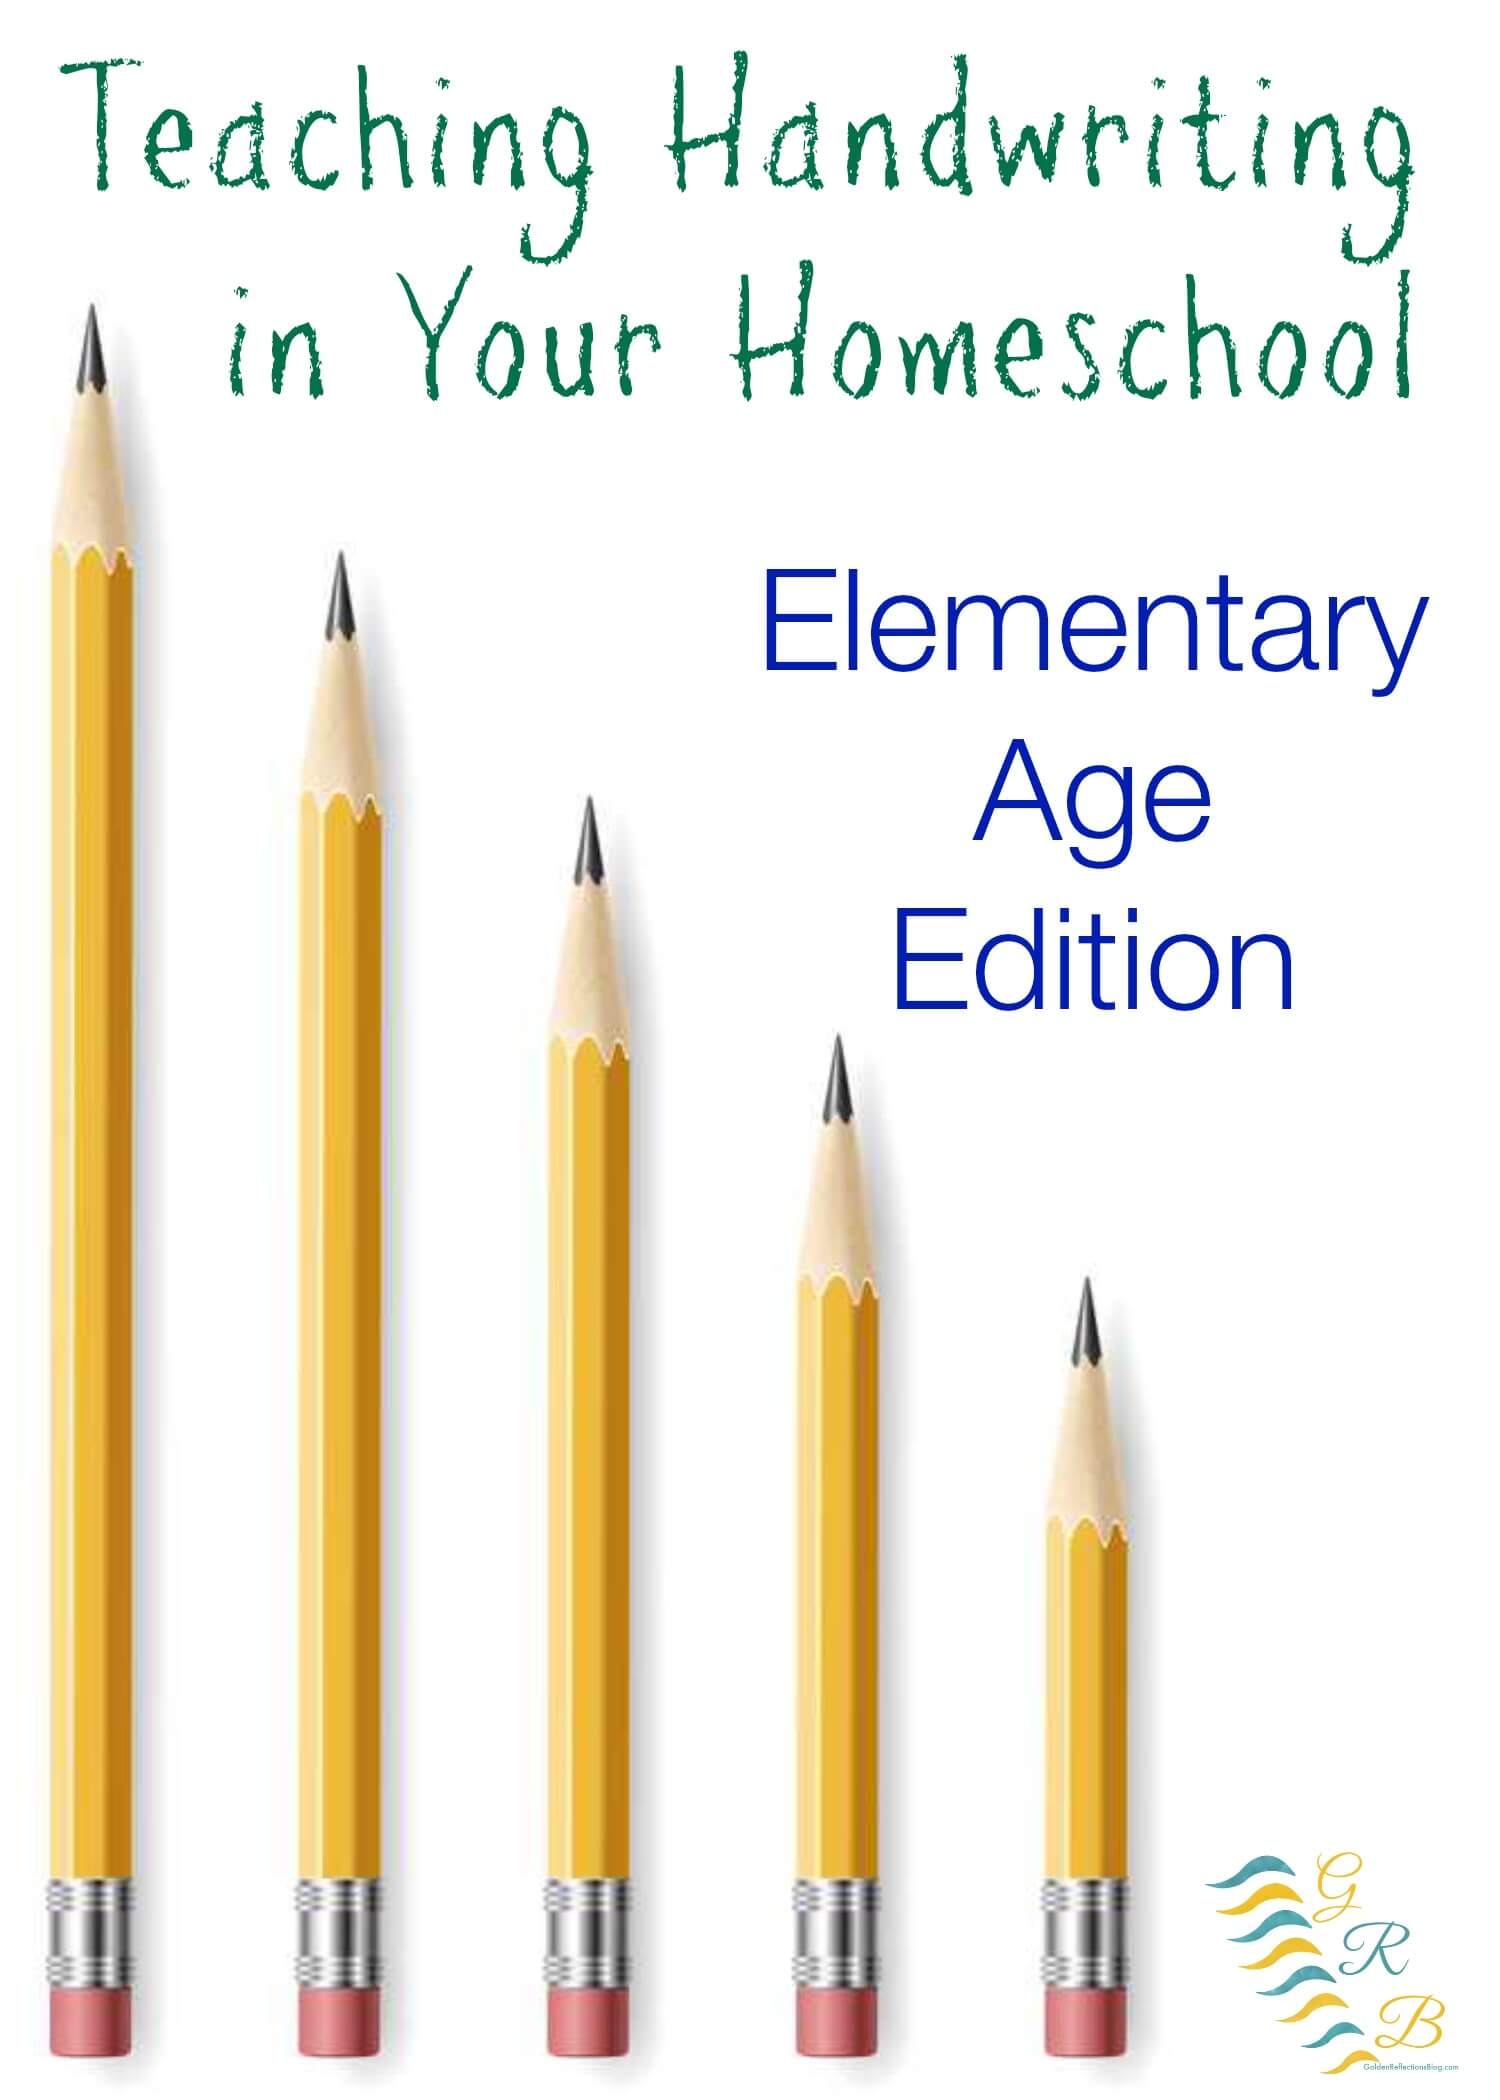 Teaching Handwriting in Your Homeschool: Elementary Edition